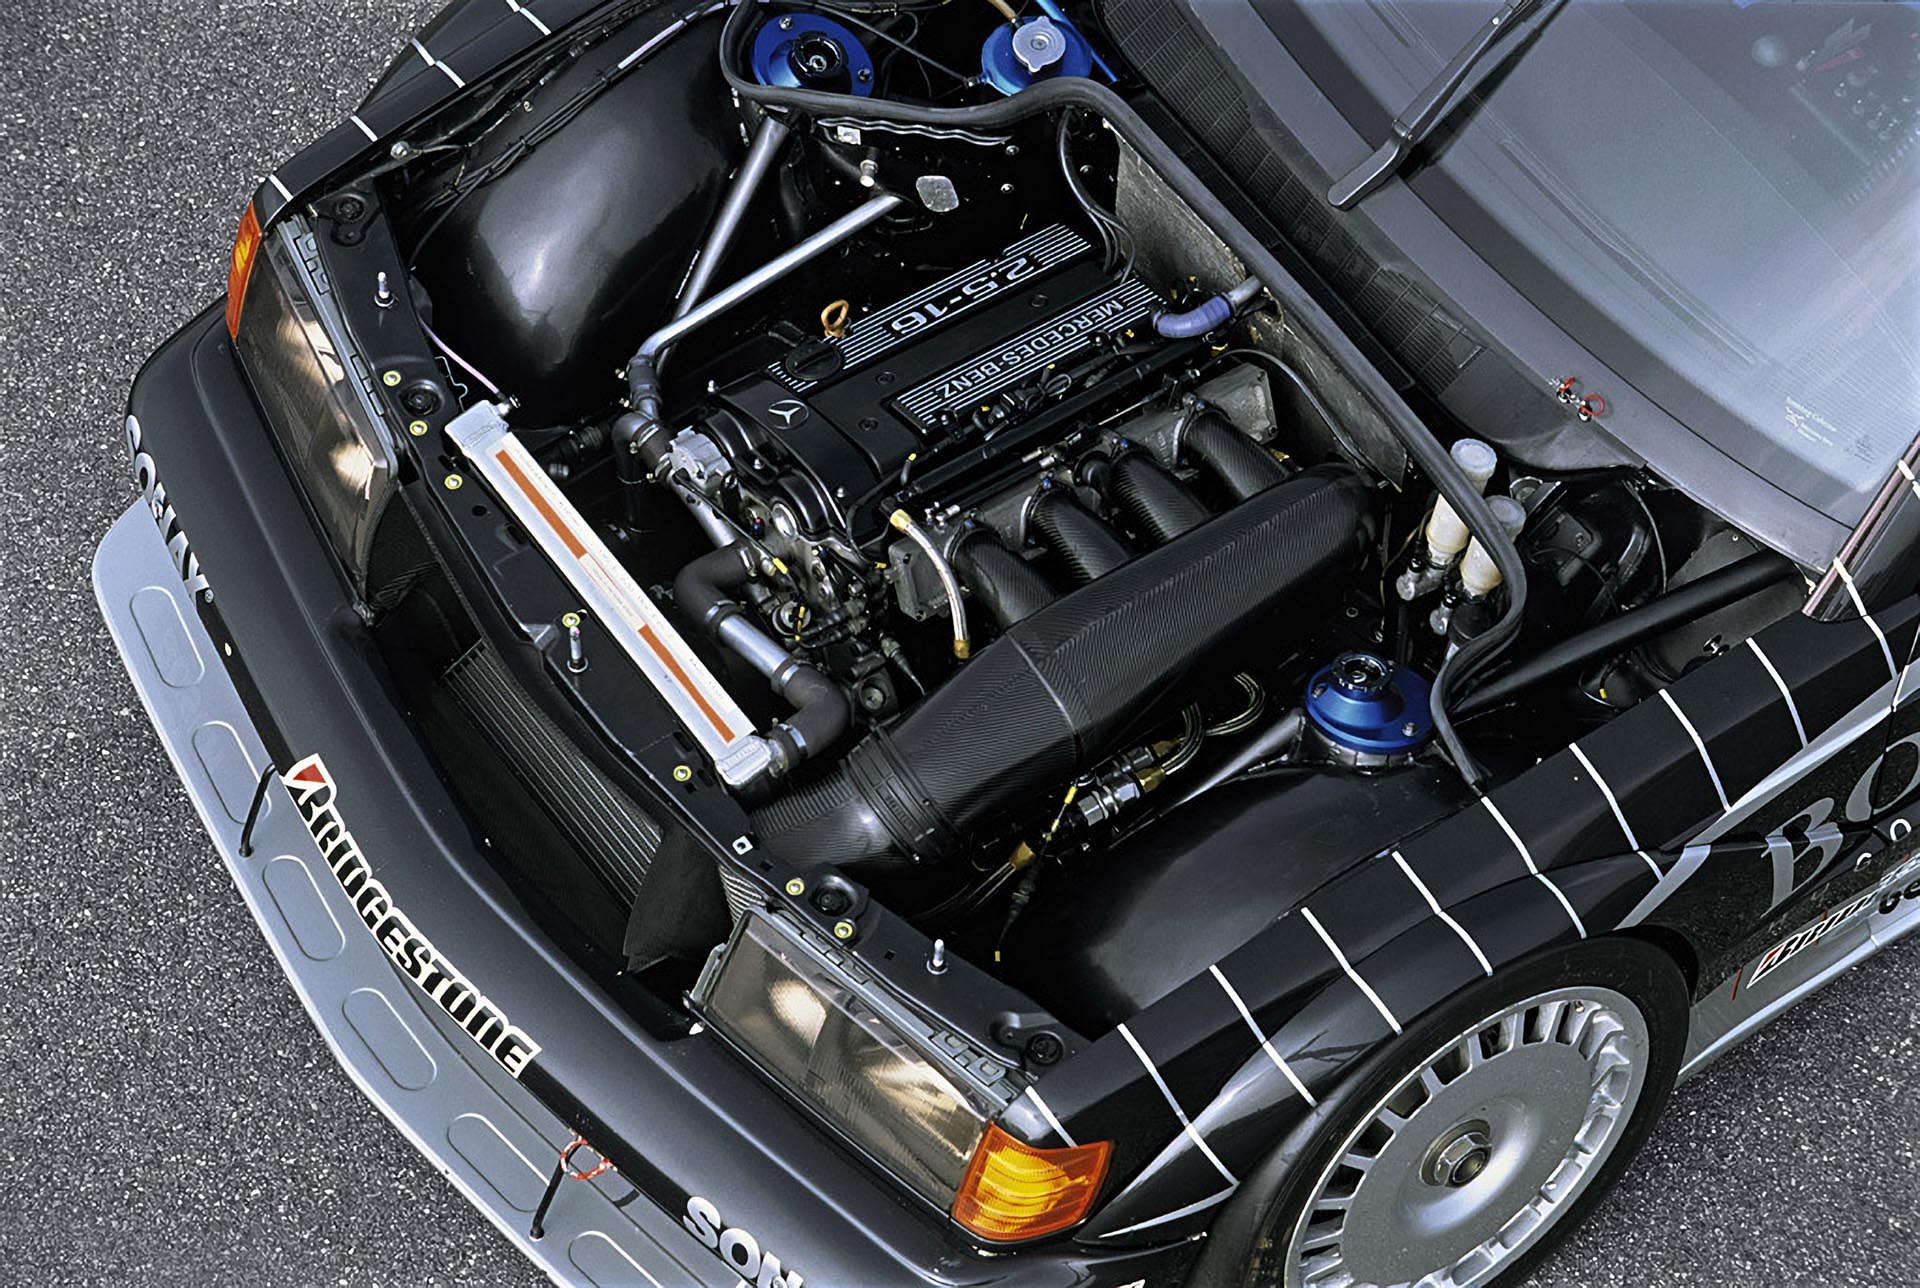 11-14_MercedesBenz190e2.5evo_engine